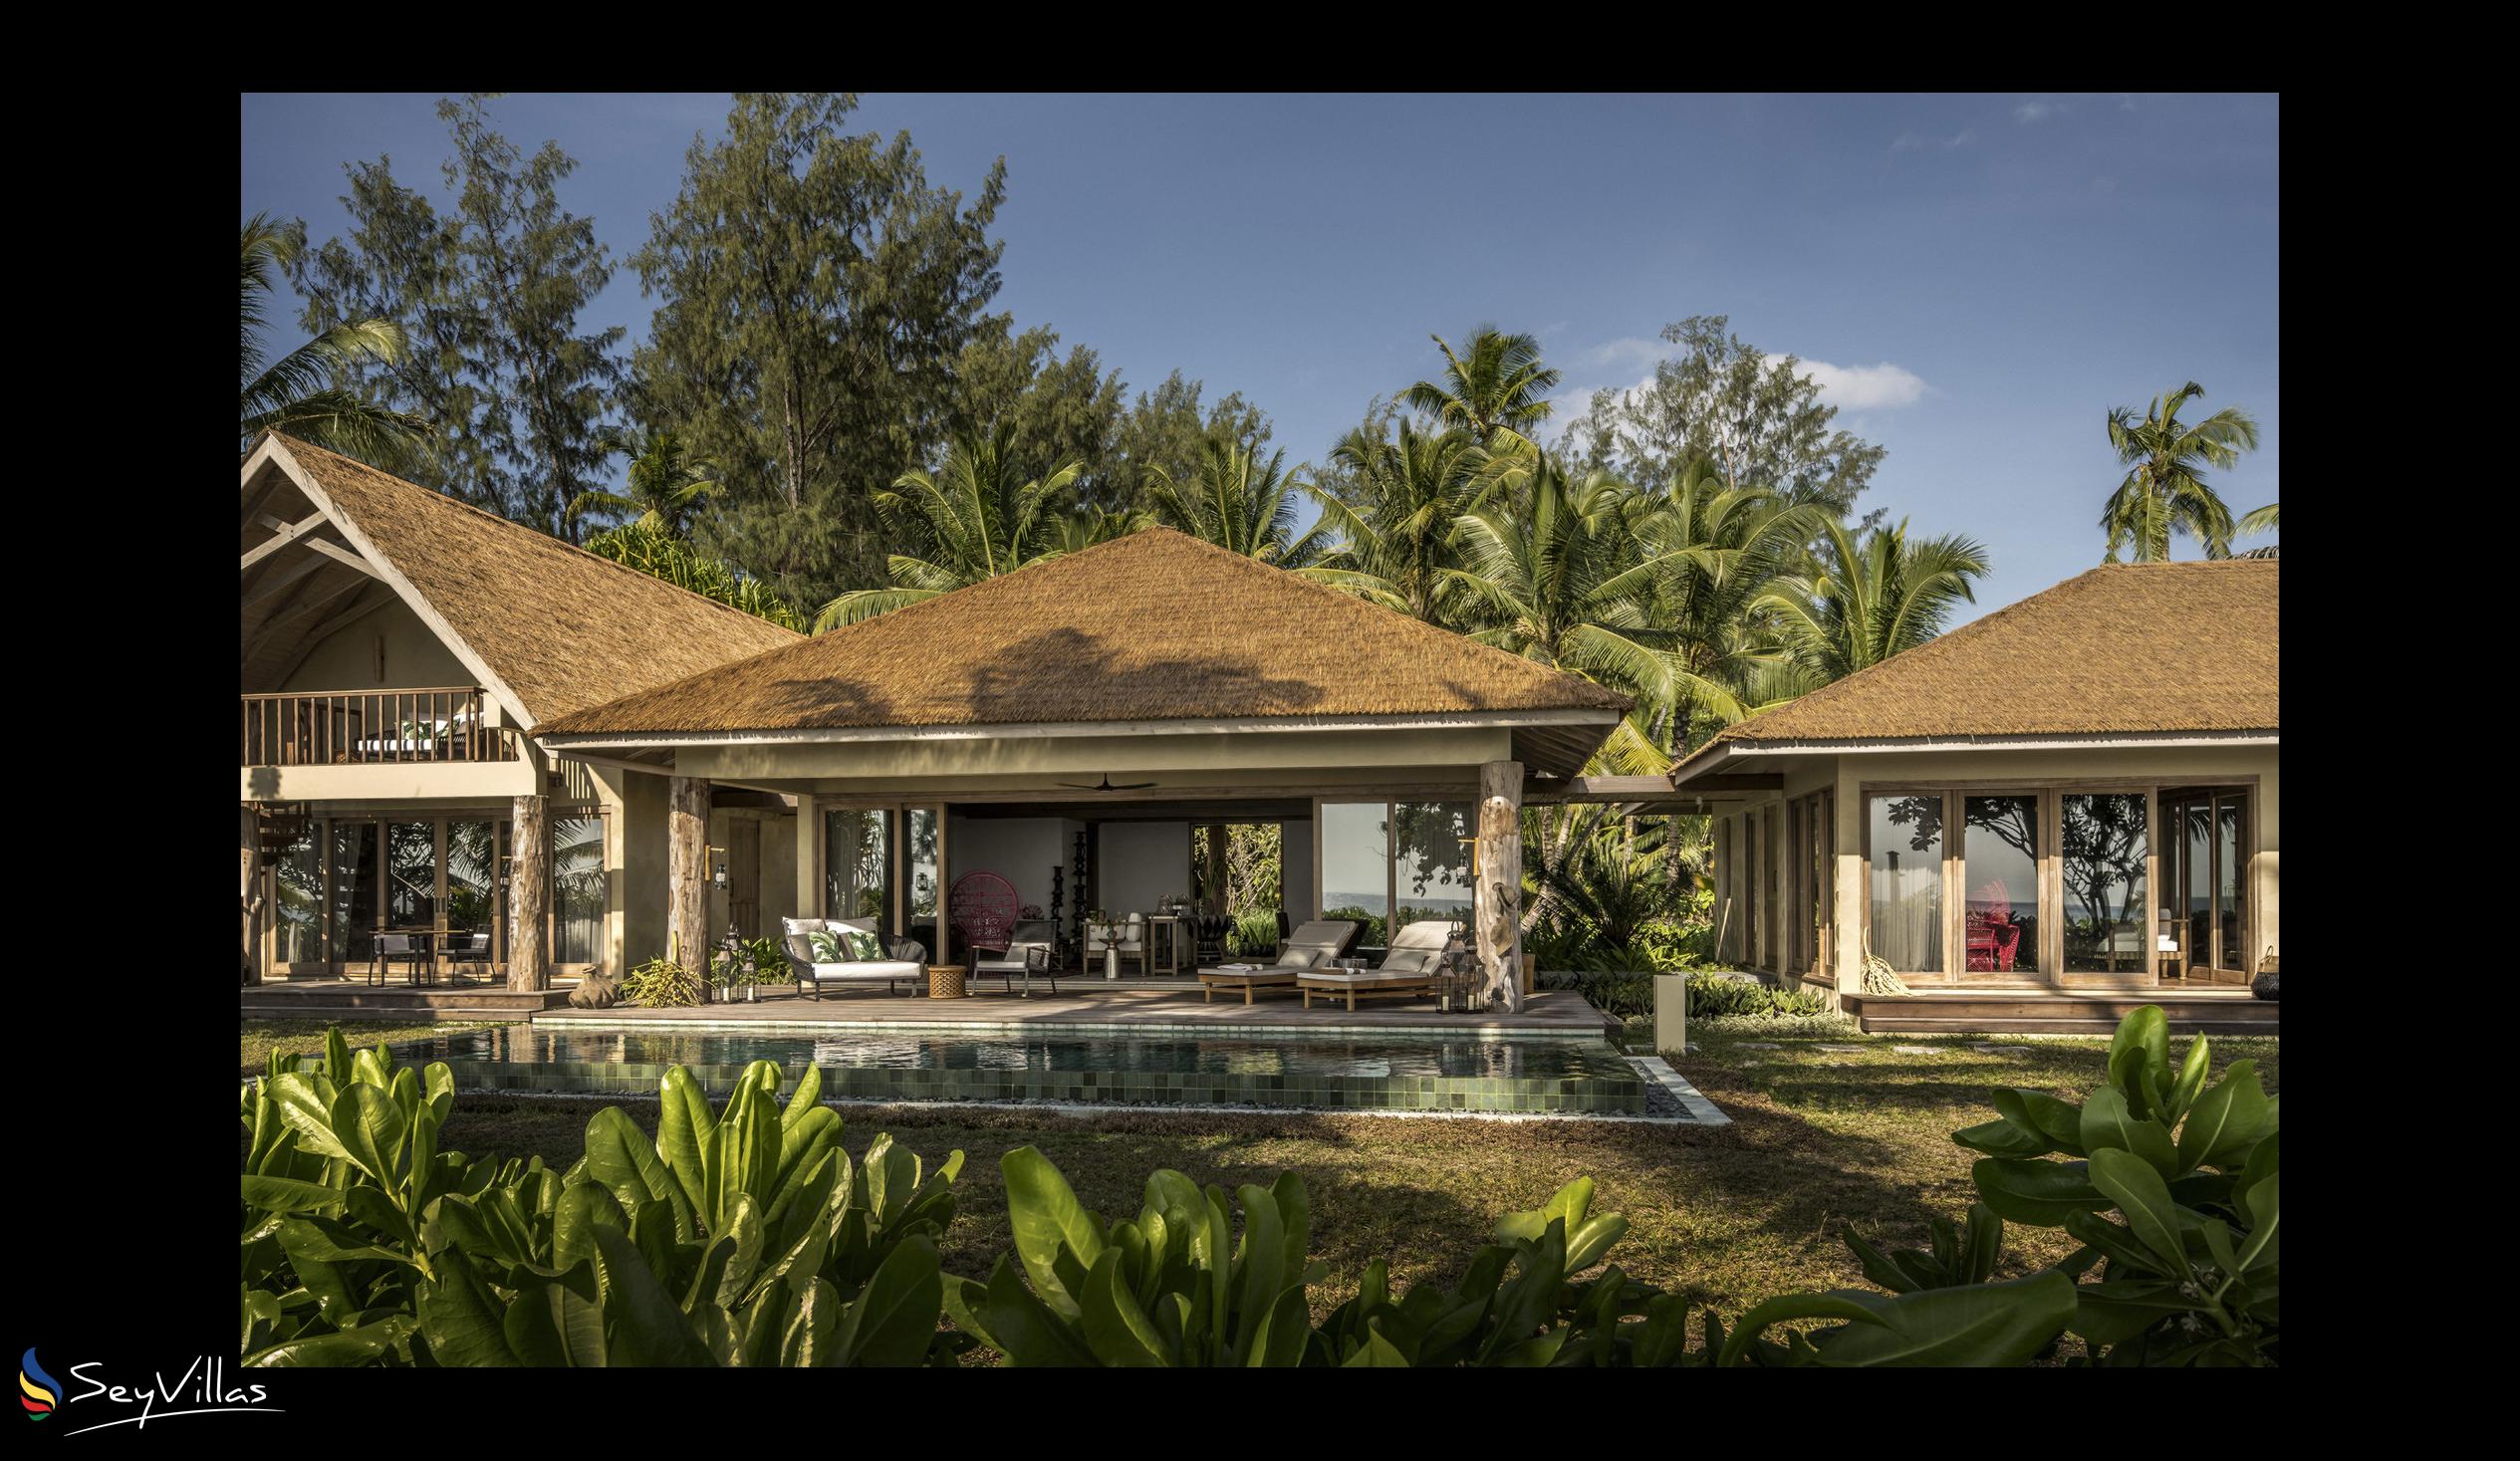 Foto 68: Four Seasons Resort Desroches Island - Desroches Suite - Desroches Island (Seychellen)